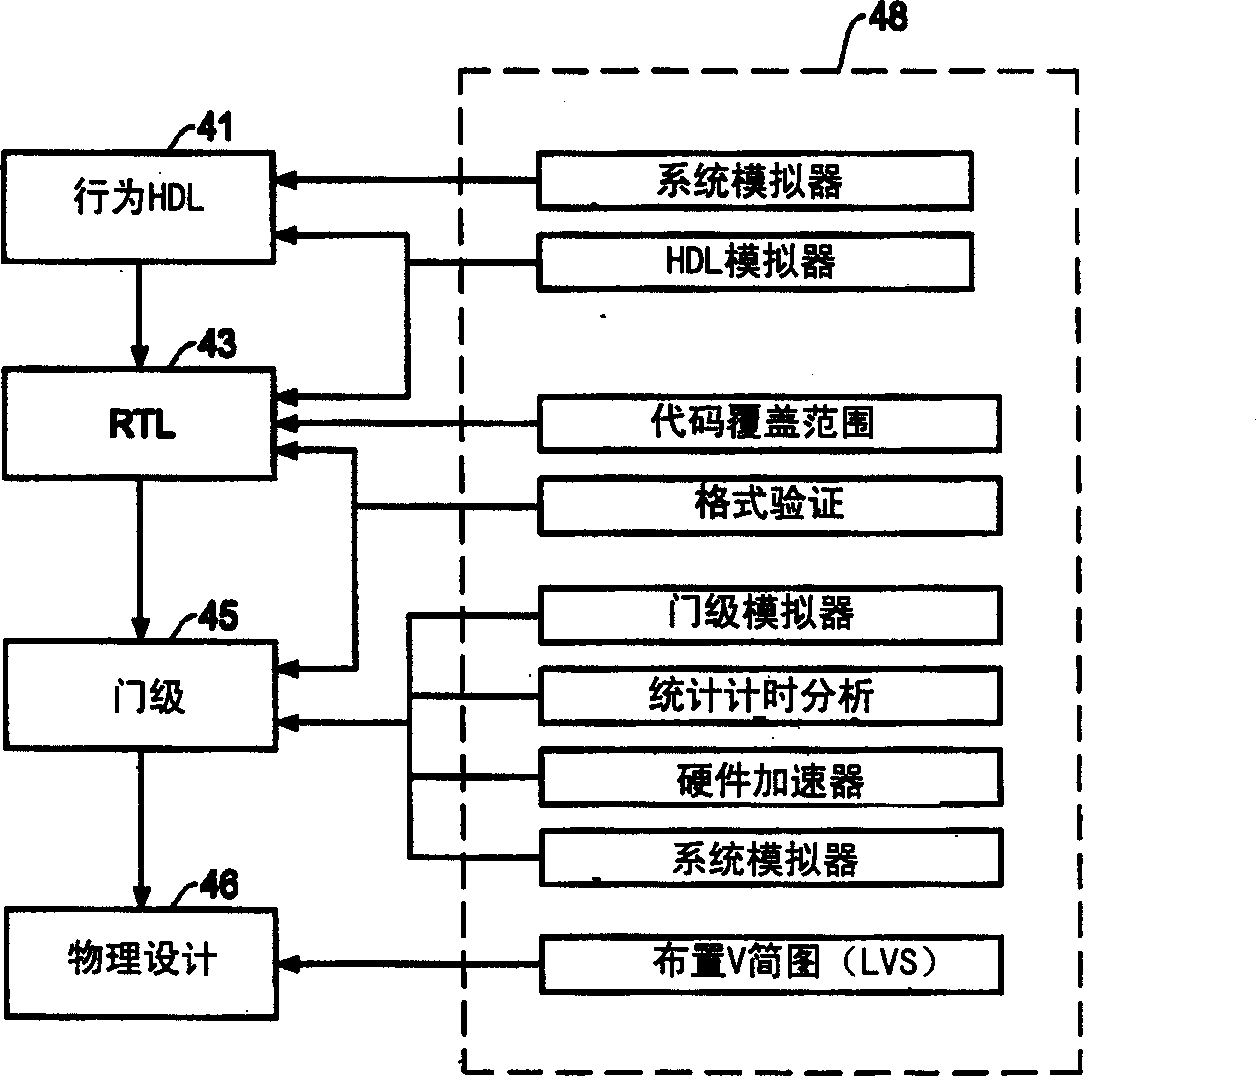 Compound integrated circuit design verification method